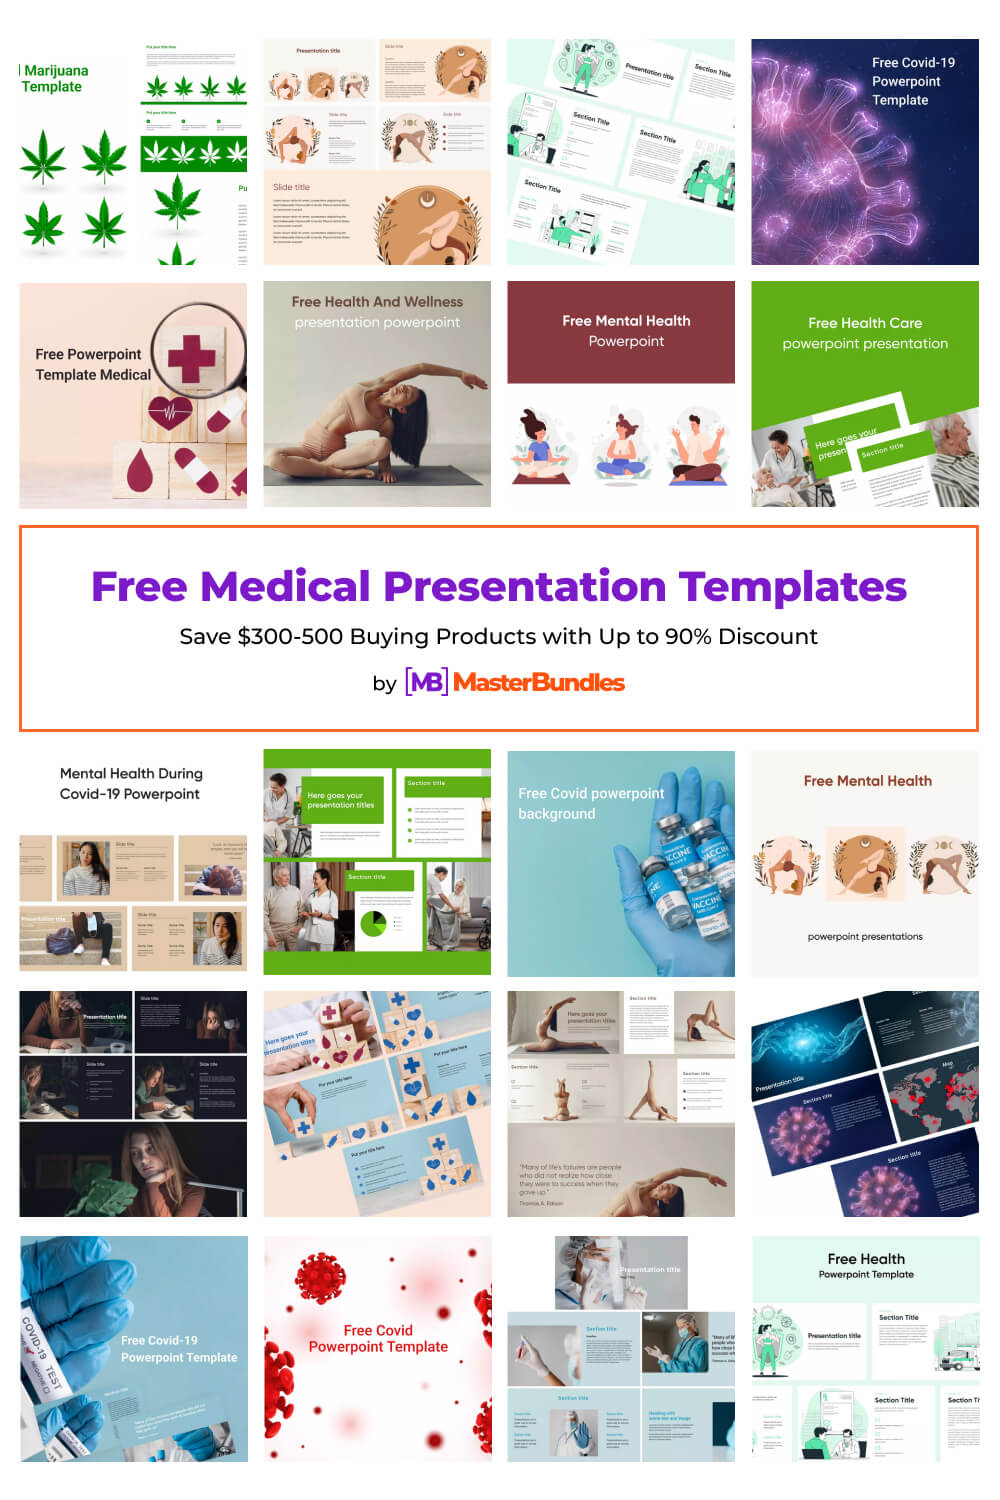 free medical presentation templates pinterest image.